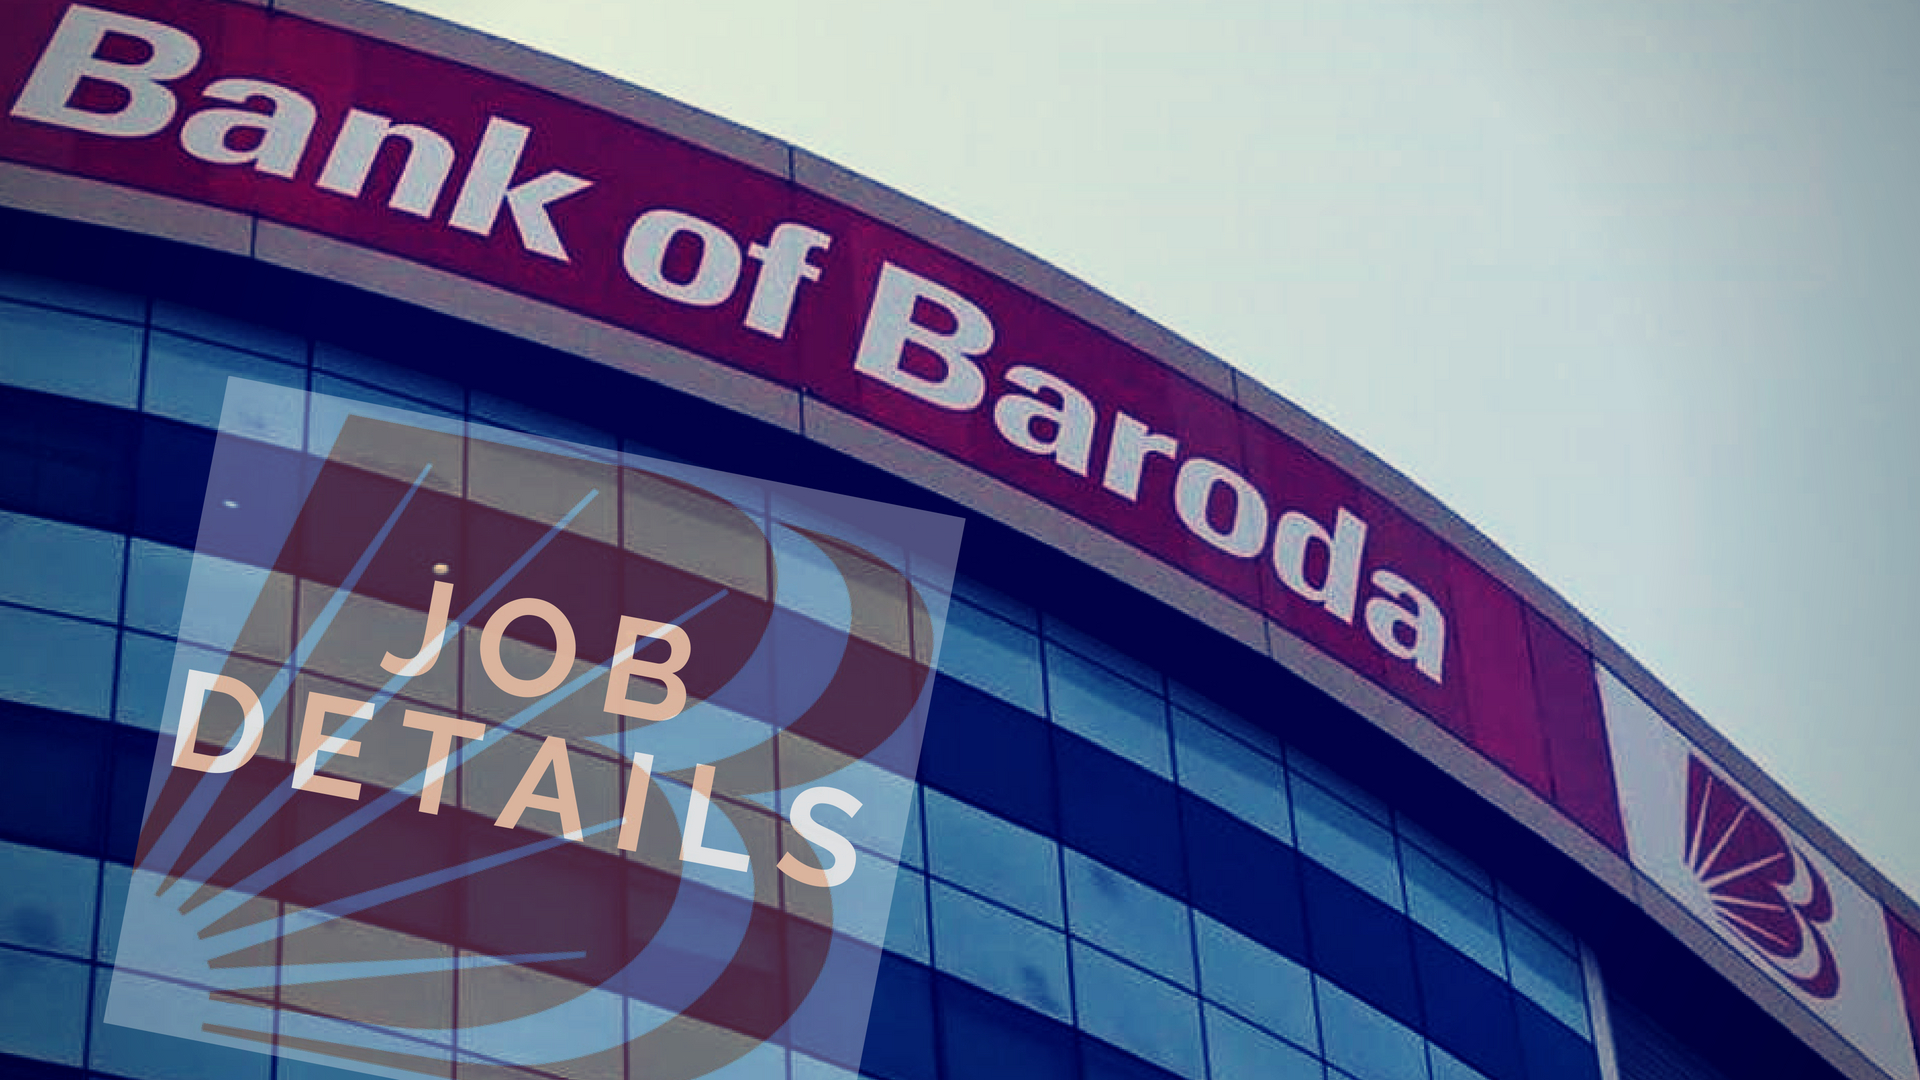  Bank of baroda jobs